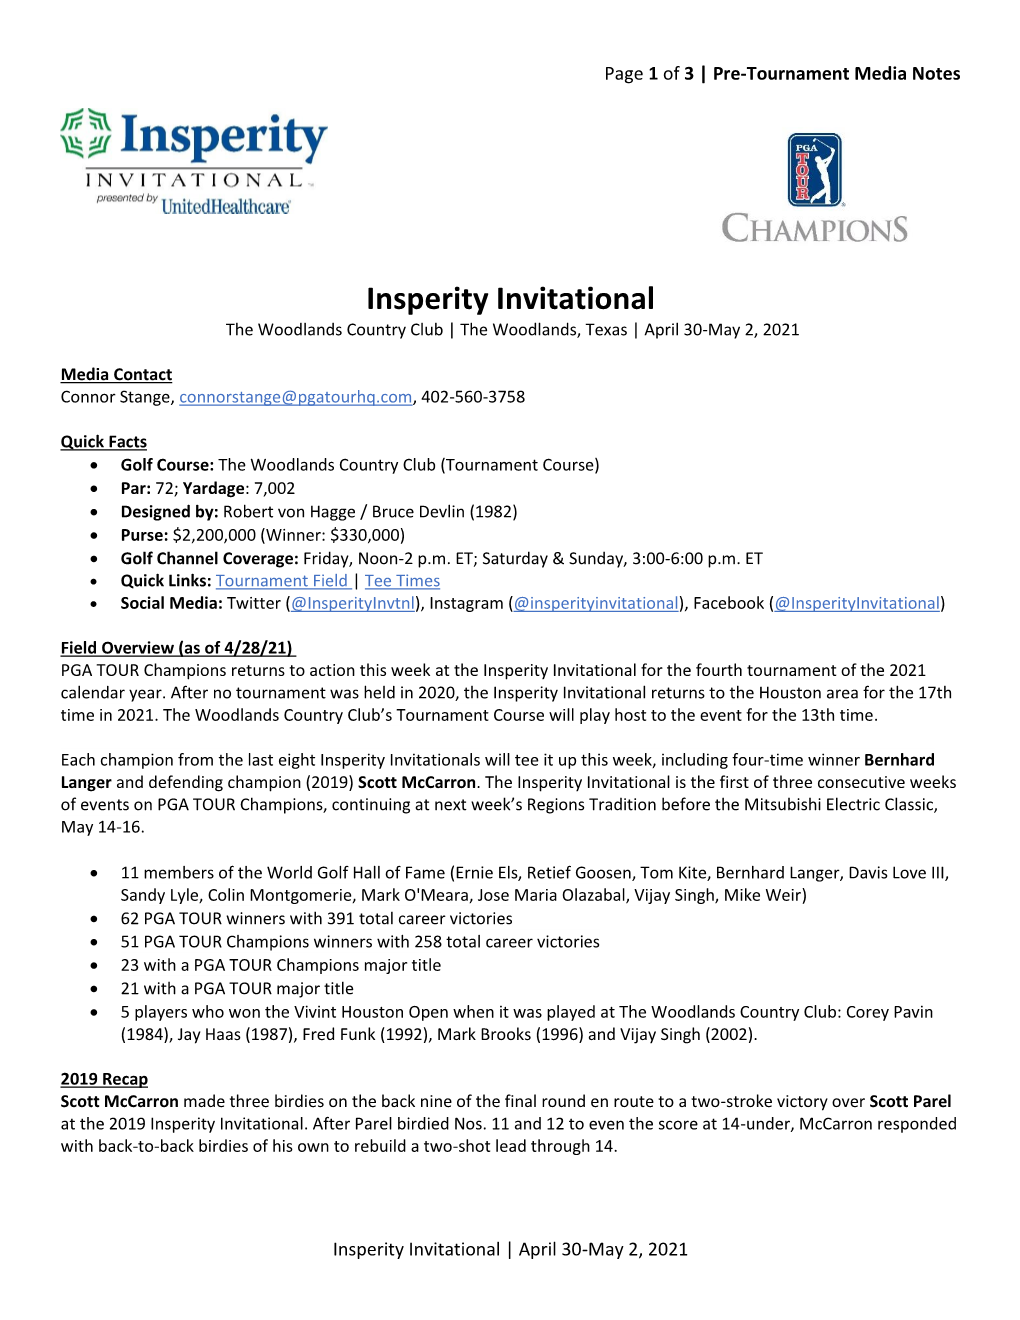 Insperity Invitational Pre-Tournament Media Notes